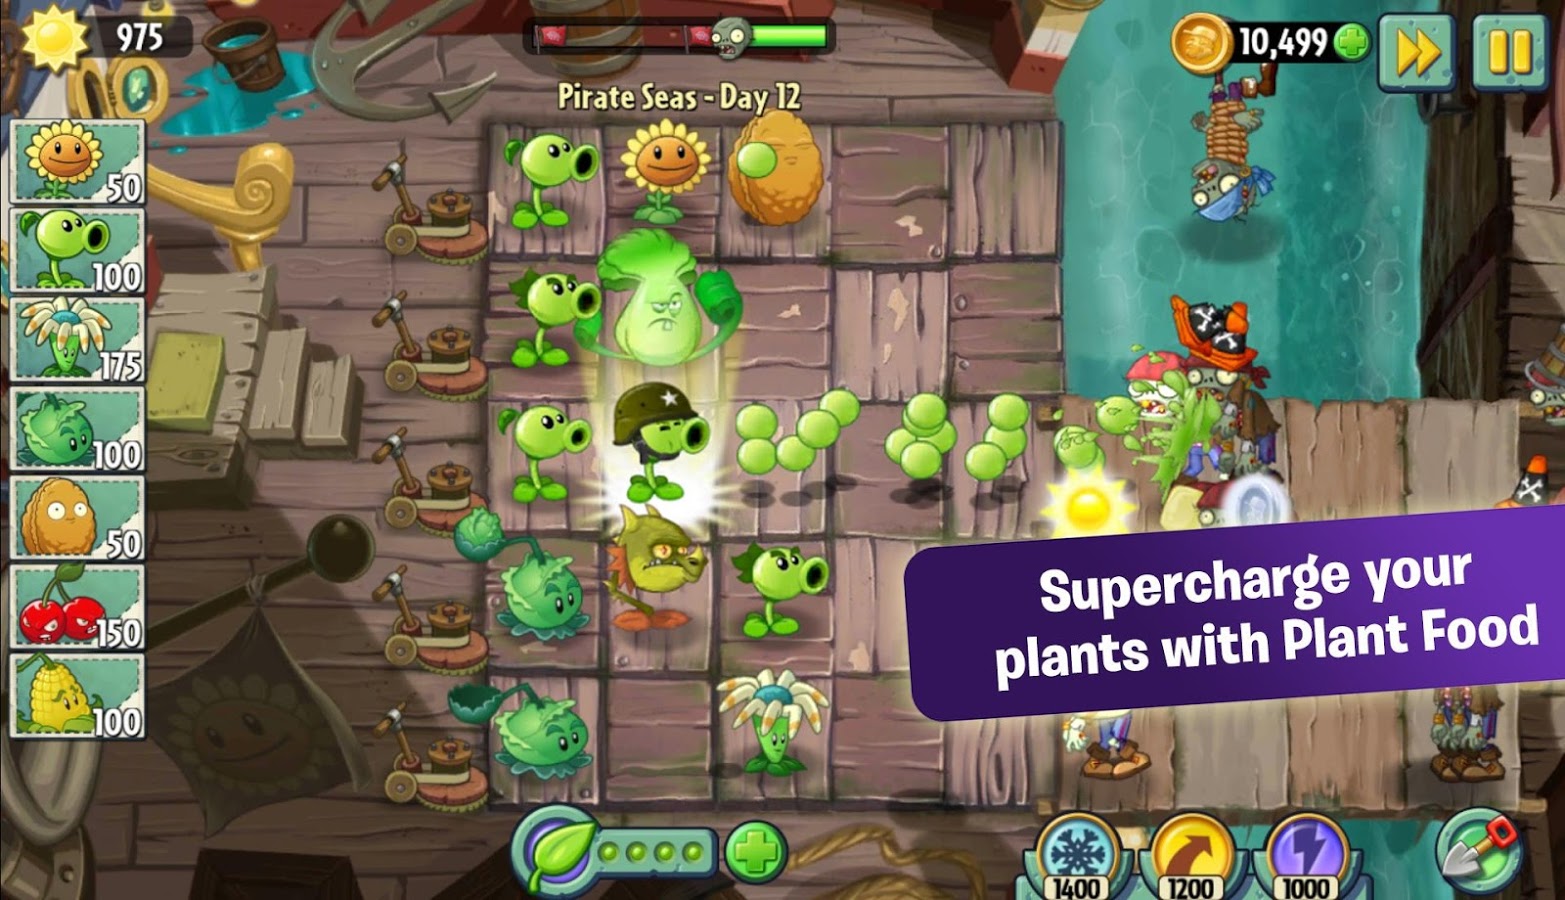 plant vs zombies 2 download